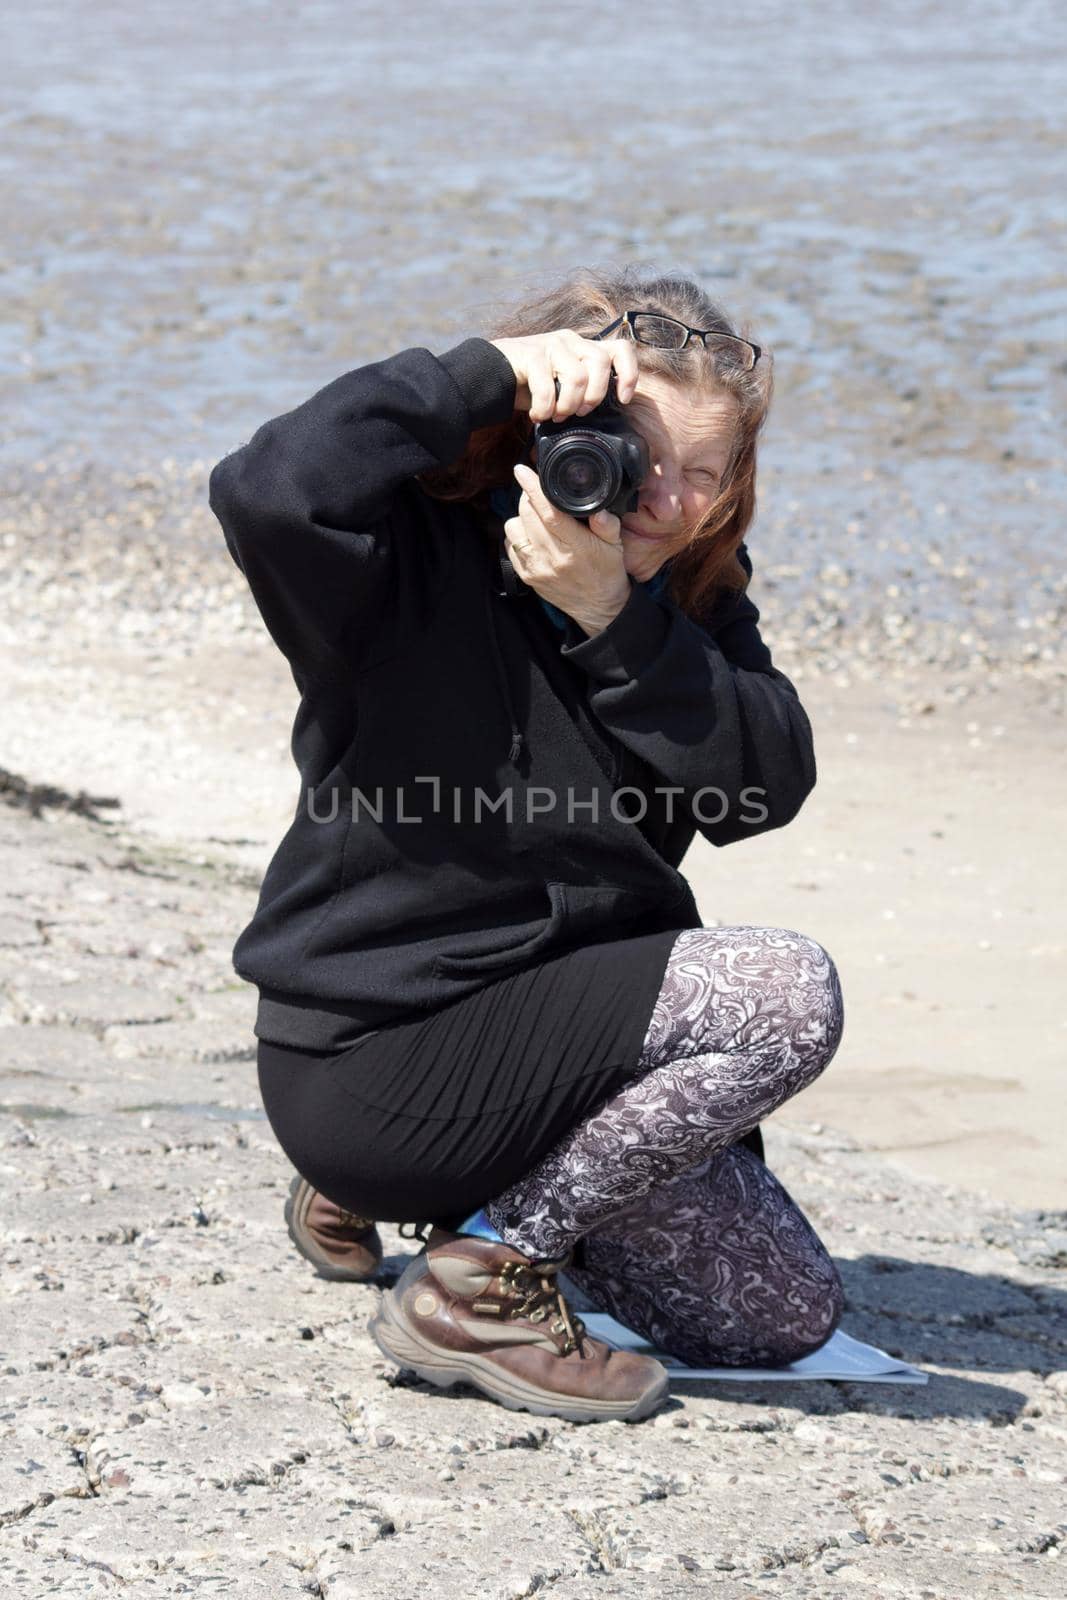 Woman operating a digital camera by WielandTeixeira